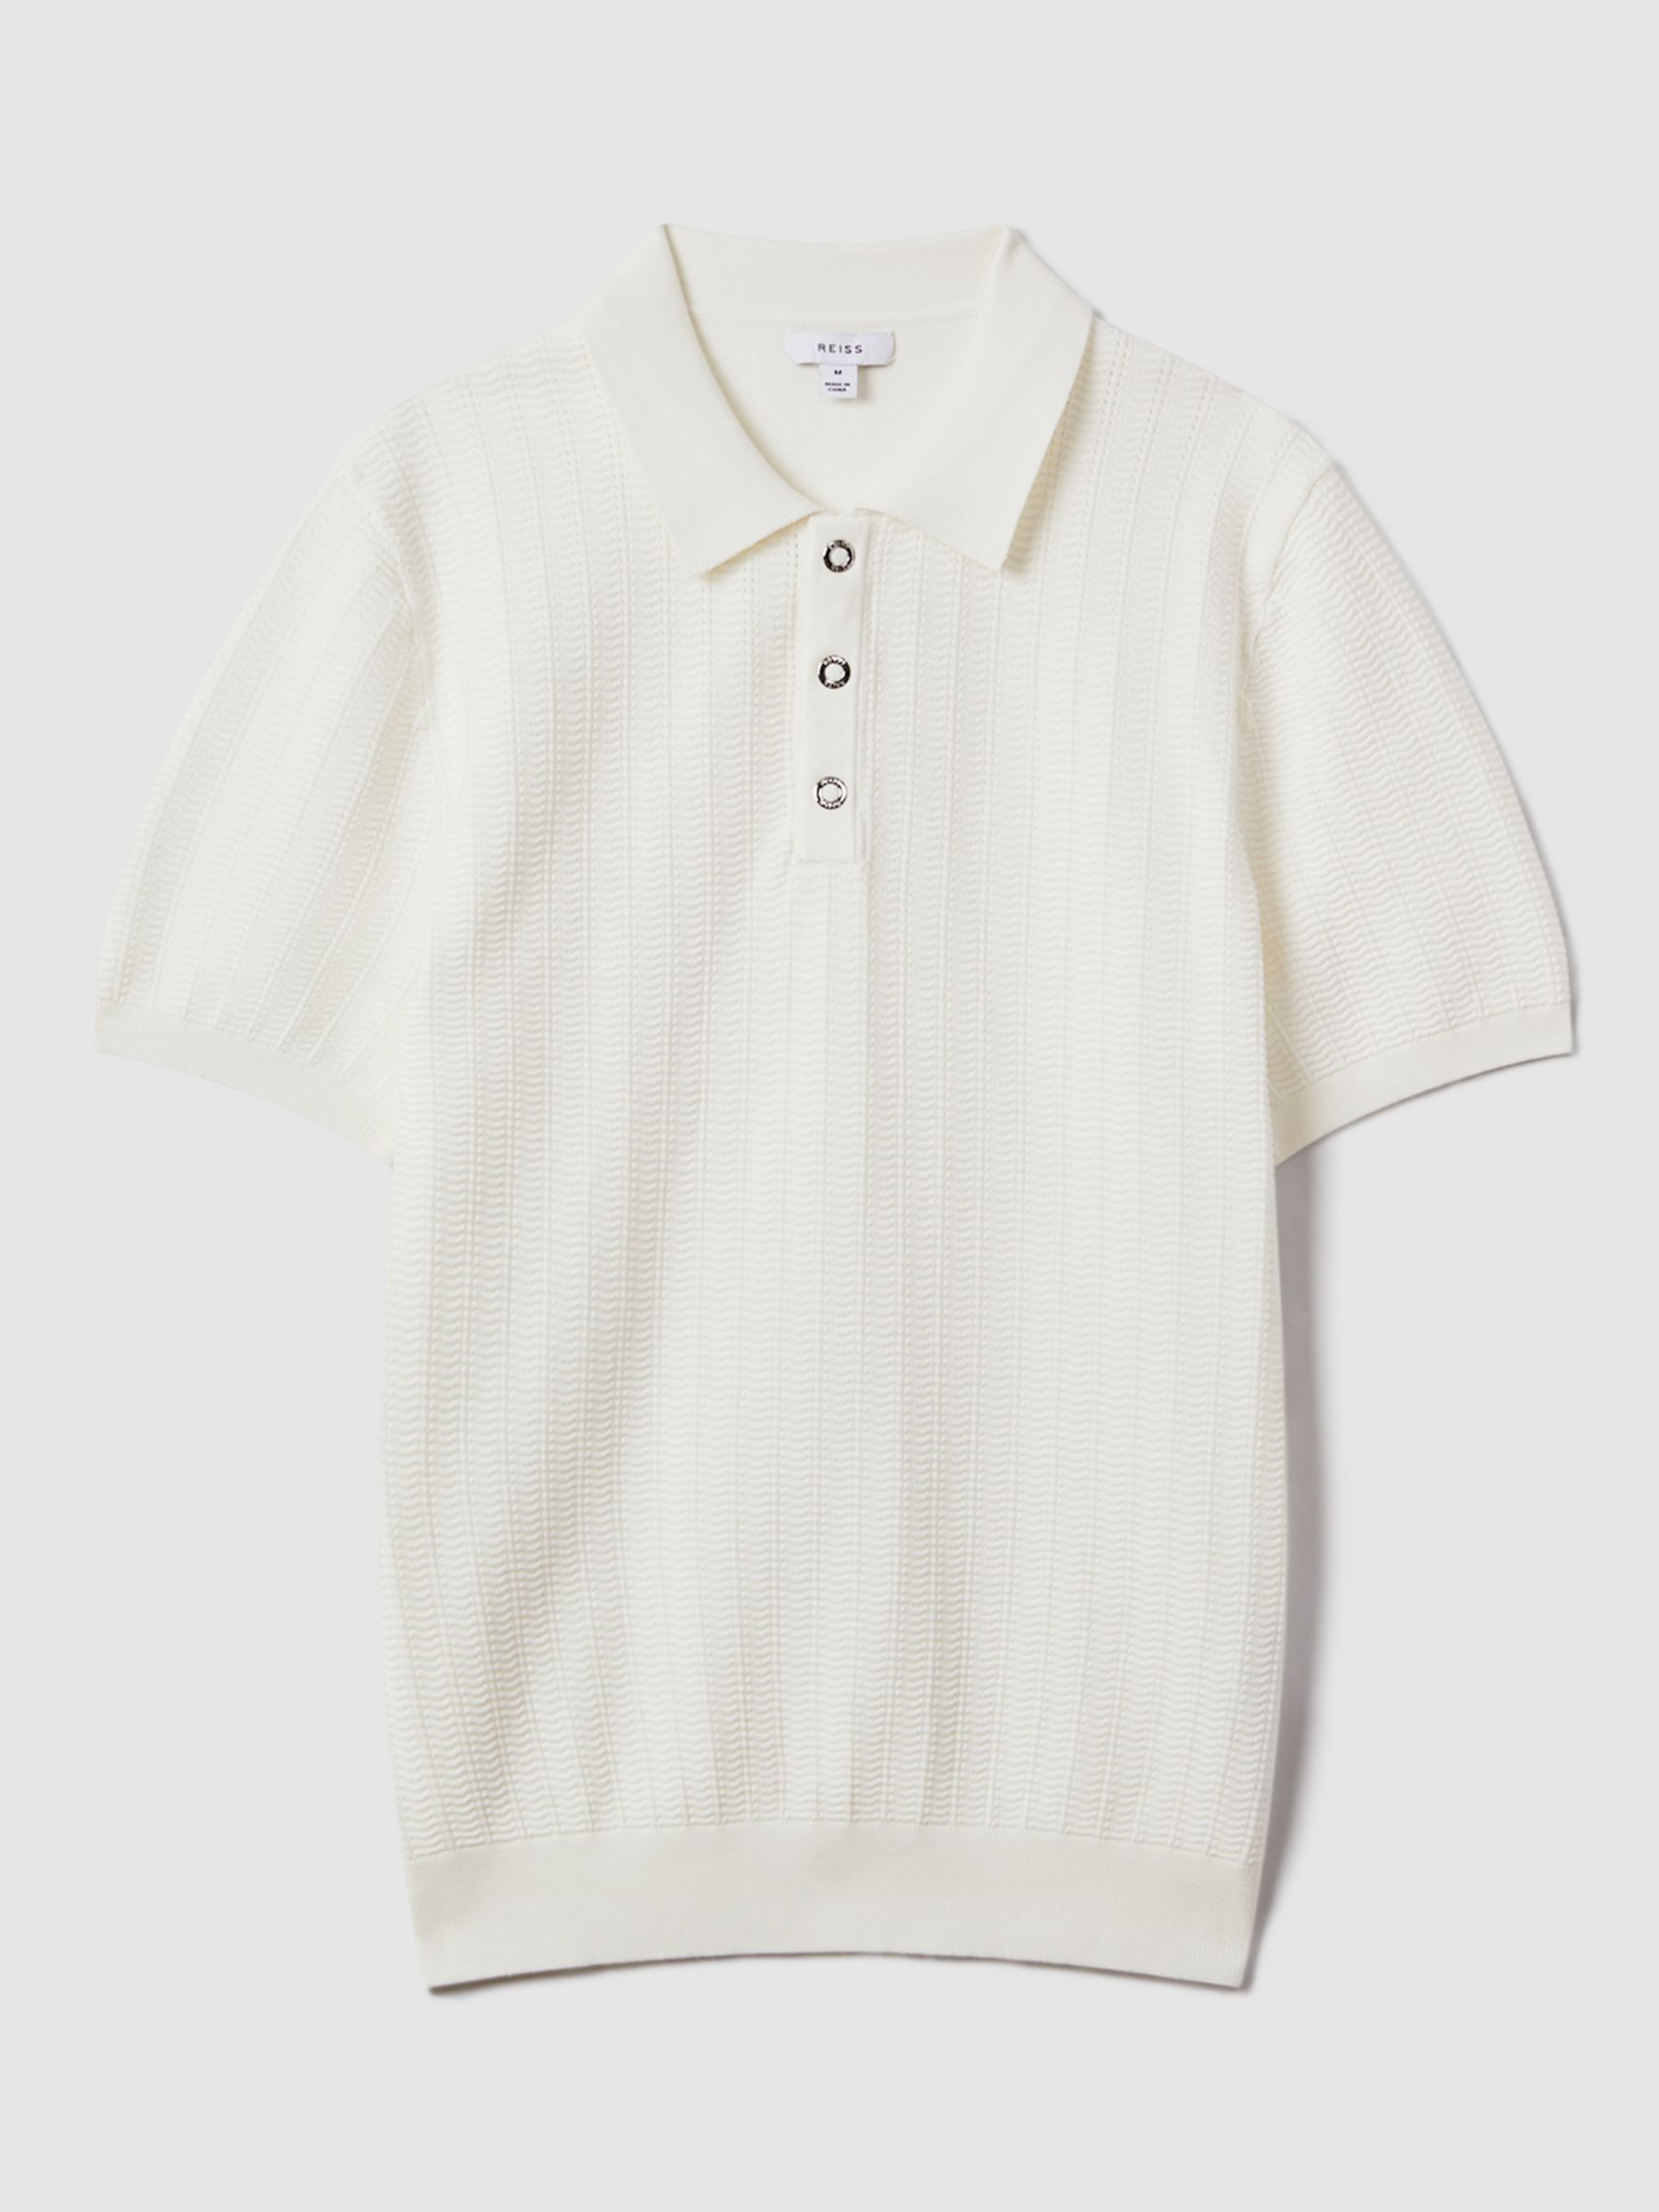 Reiss Pascoe Short Sleeve Polo Top, White, XS